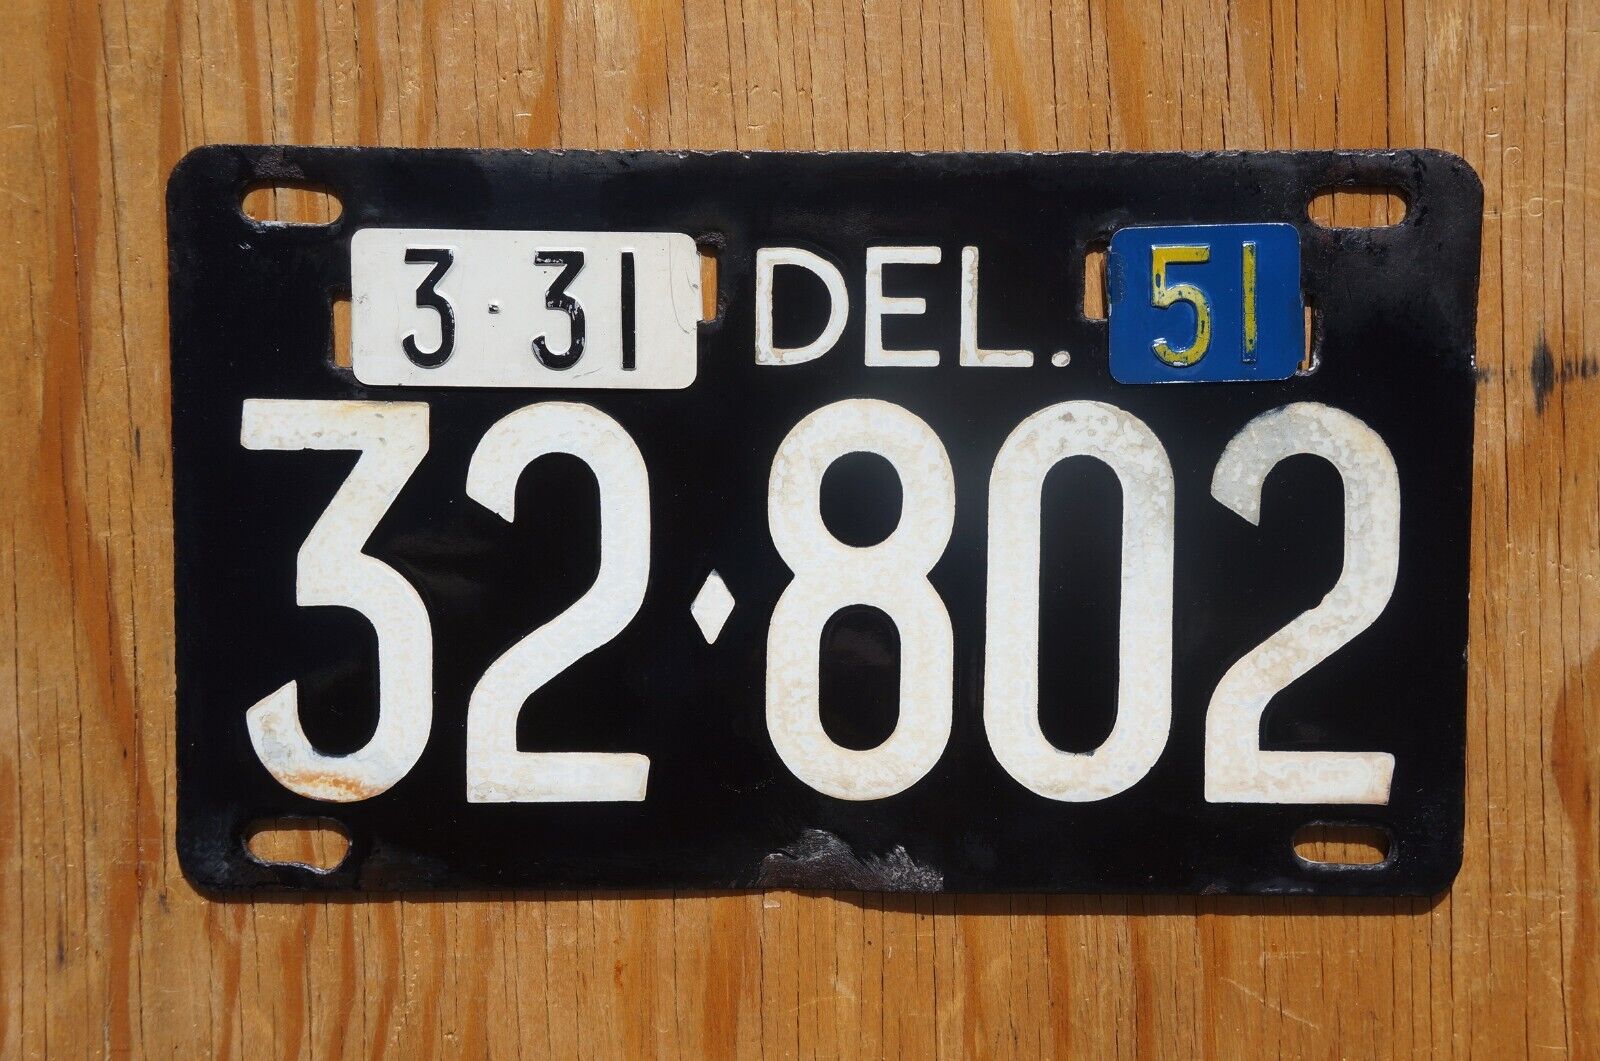 1951 Delaware Porcelain License Plate